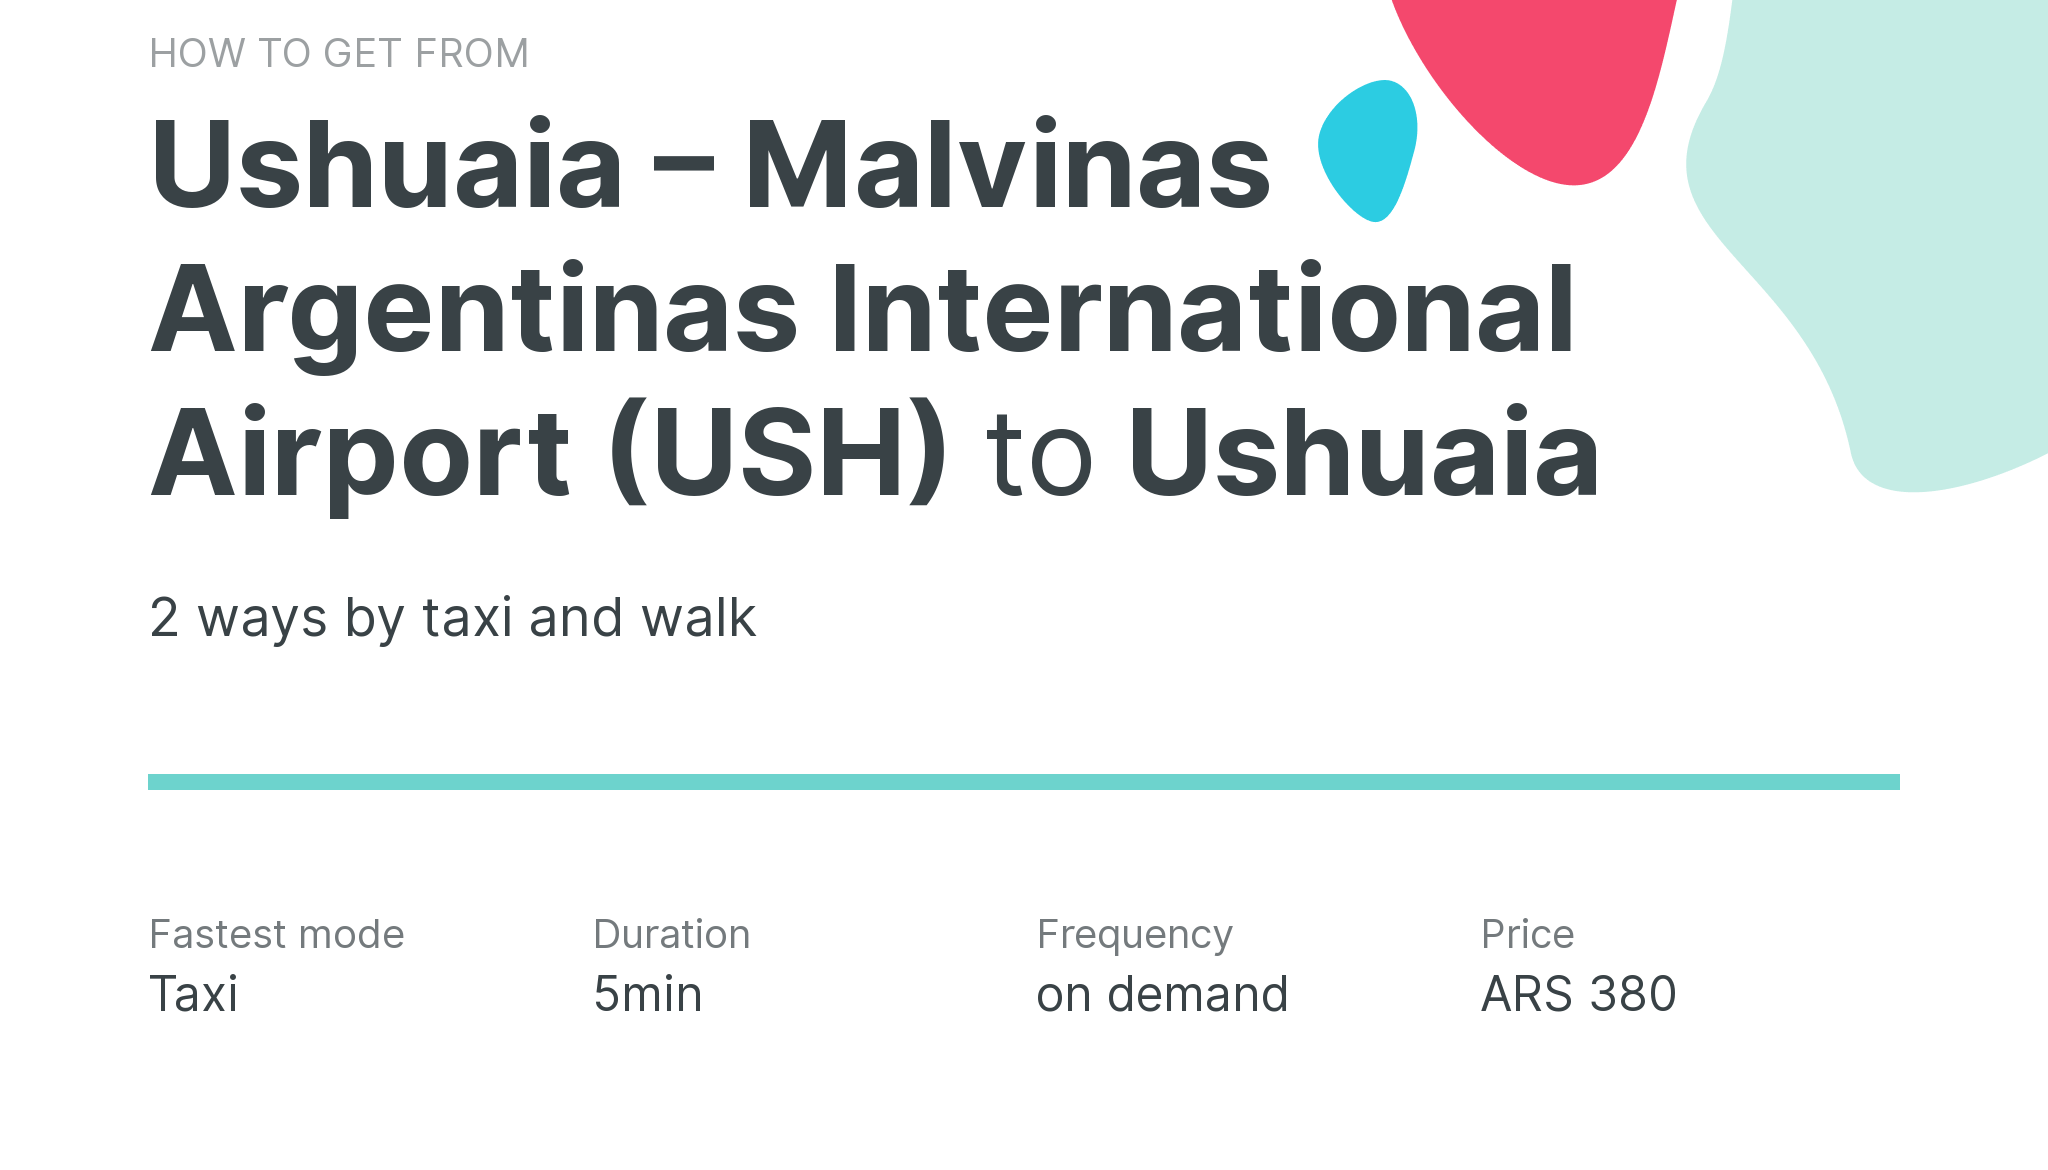 How do I get from Ushuaia – Malvinas Argentinas International Airport (USH) to Ushuaia